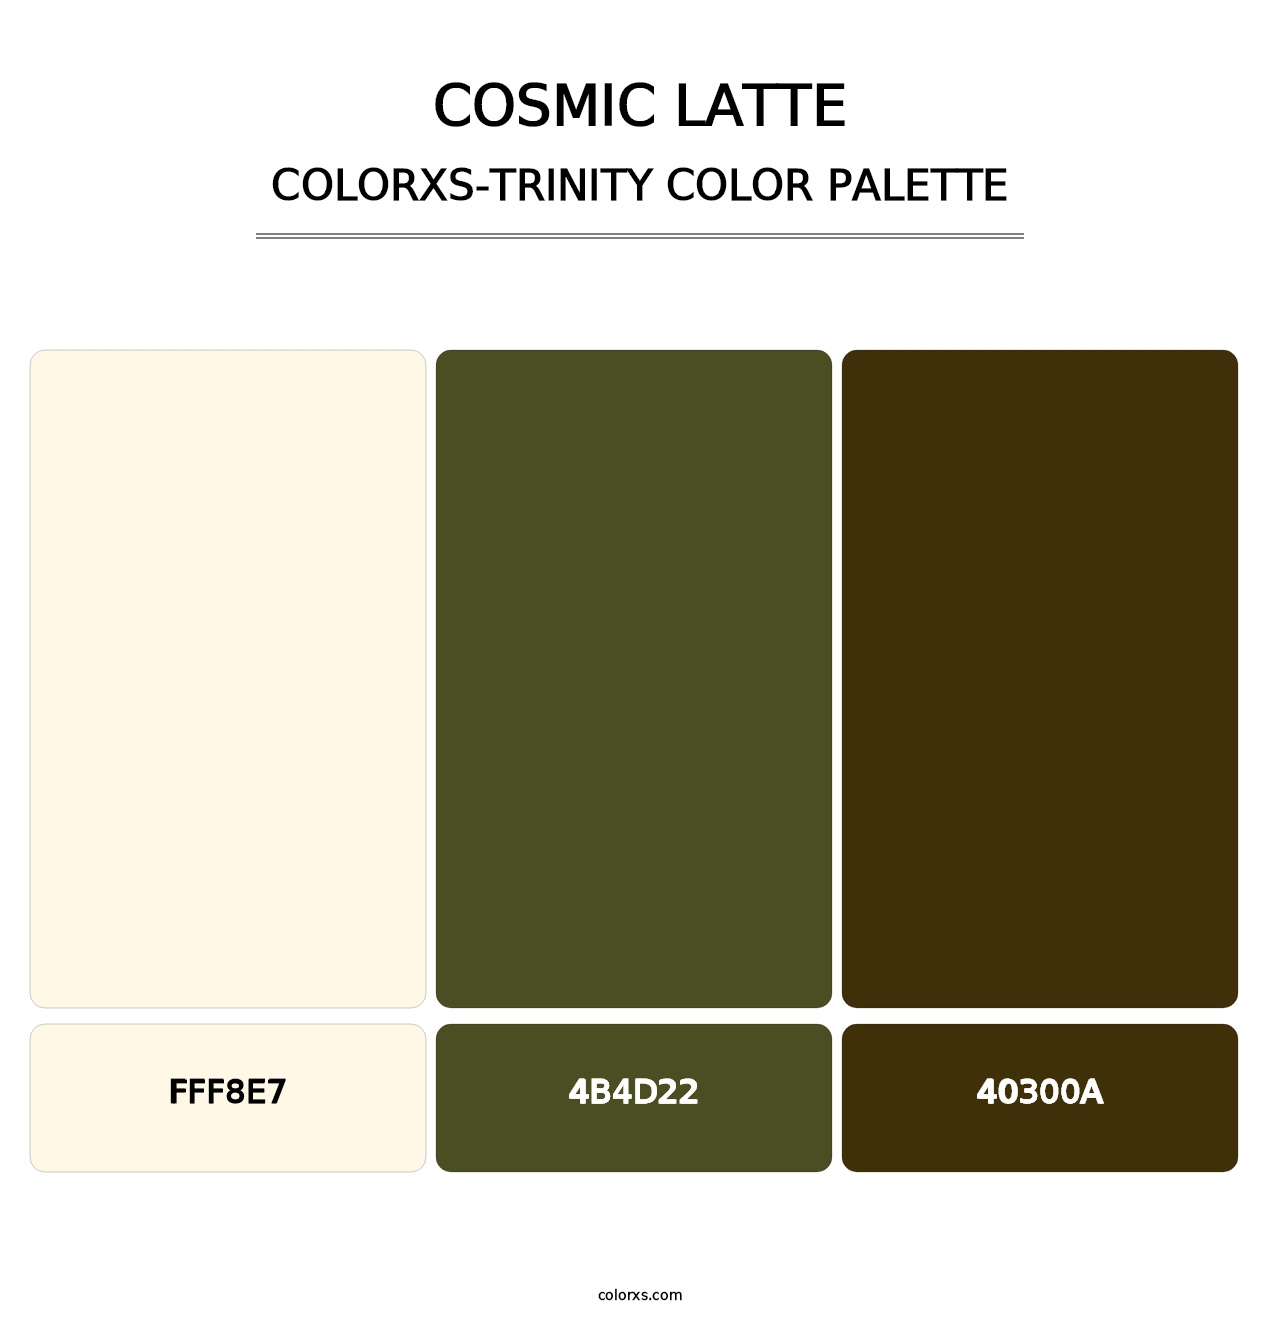 Cosmic Latte - Colorxs Trinity Palette